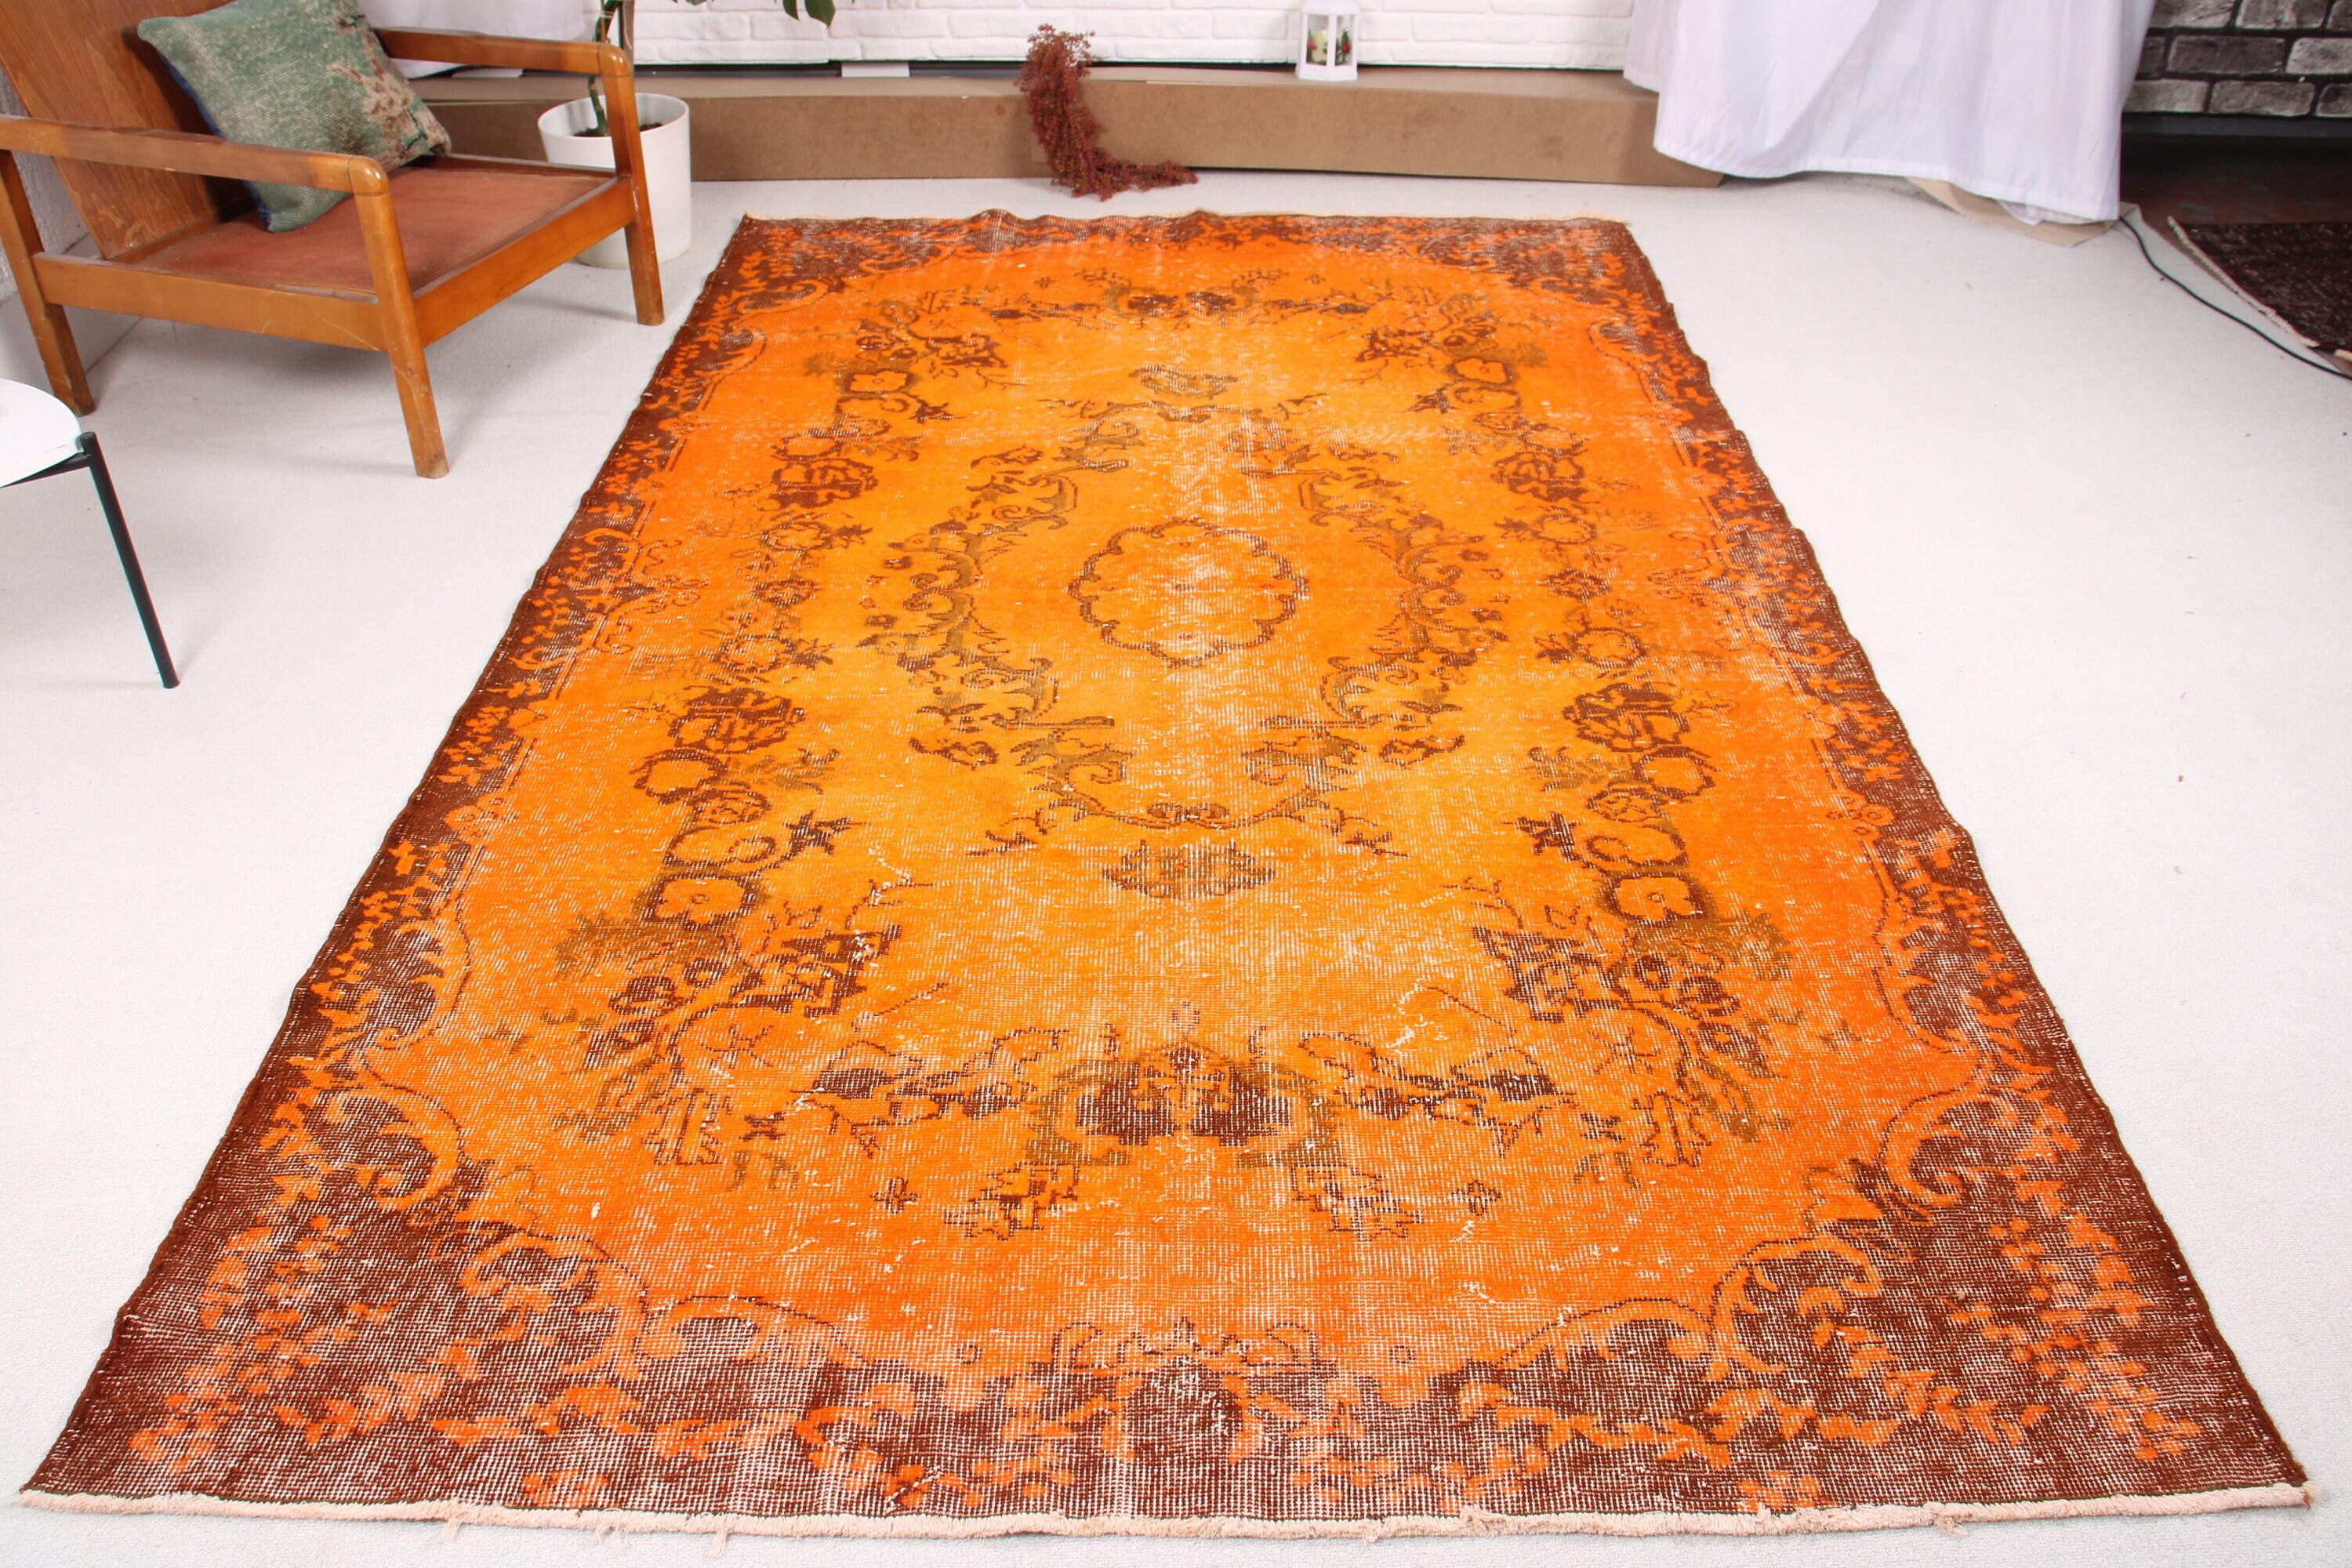 Vintage Rugs, Antique Rug, Turkish Rugs, Art Rug, Dining Room Rugs, 5.9x9.5 ft Large Rug, Salon Rug, Orange Oushak Rugs, Home Decor Rugs